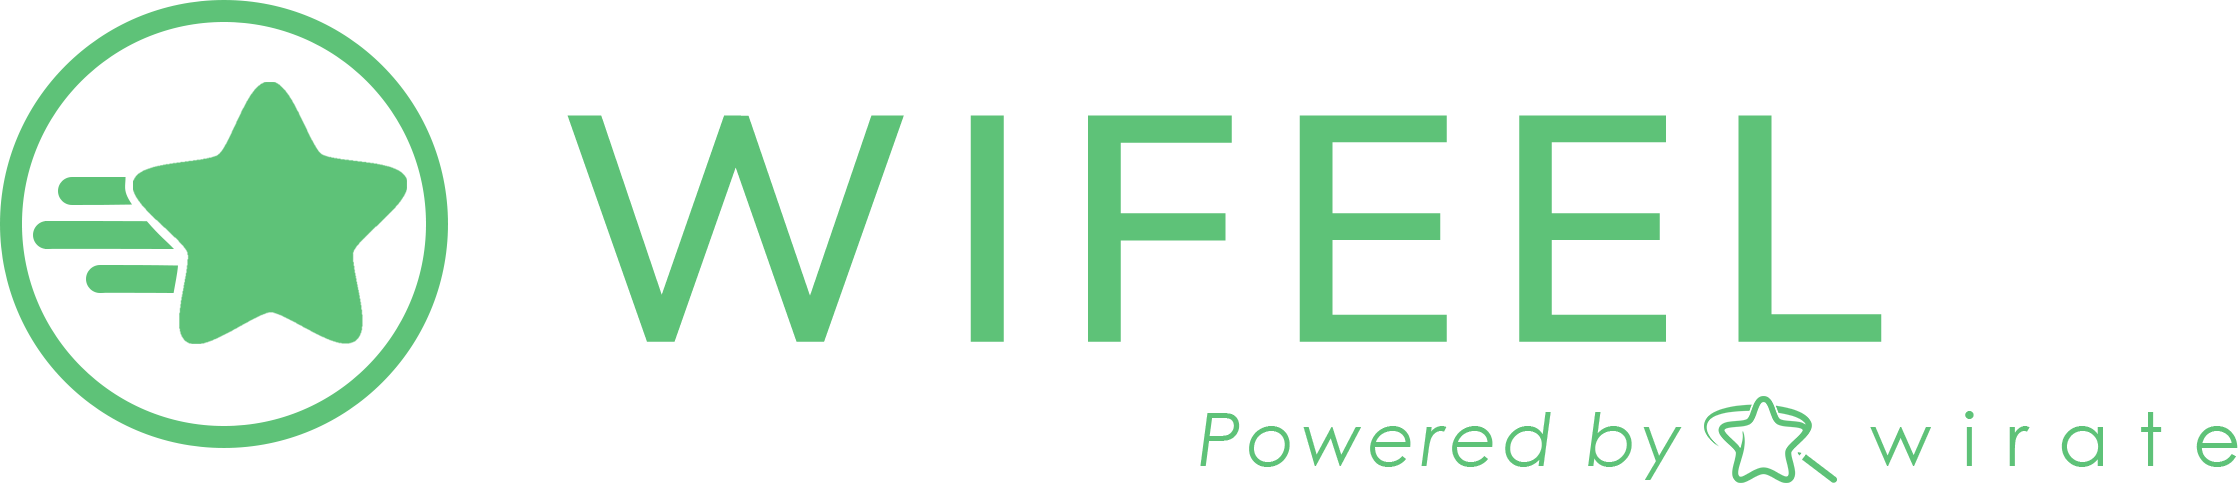 Wifeel logo